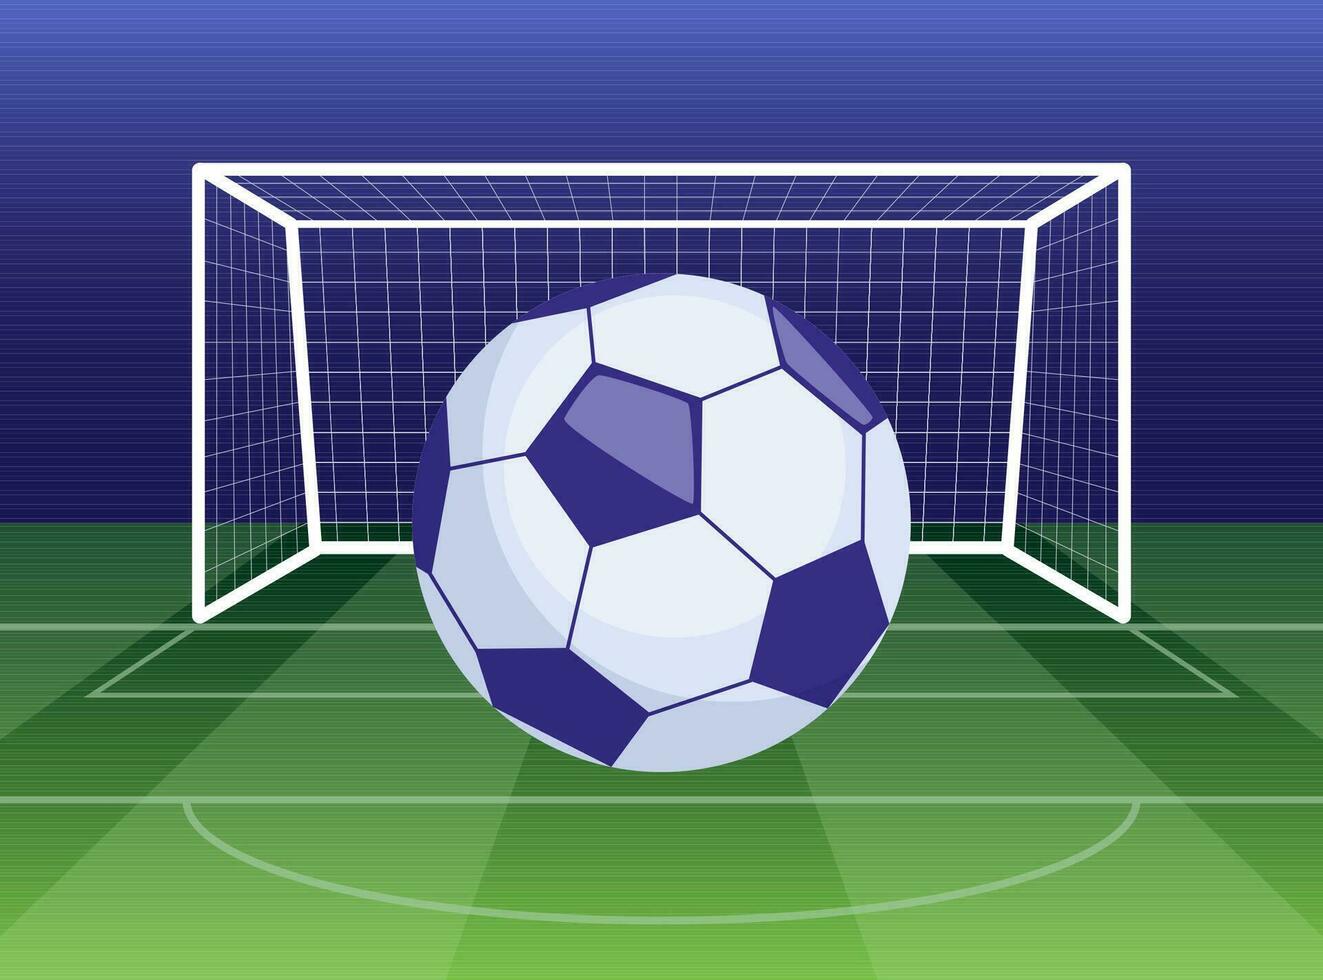 Soccer ball on green field in front of goal post. Football ball against sport stadium. Vector illustration.